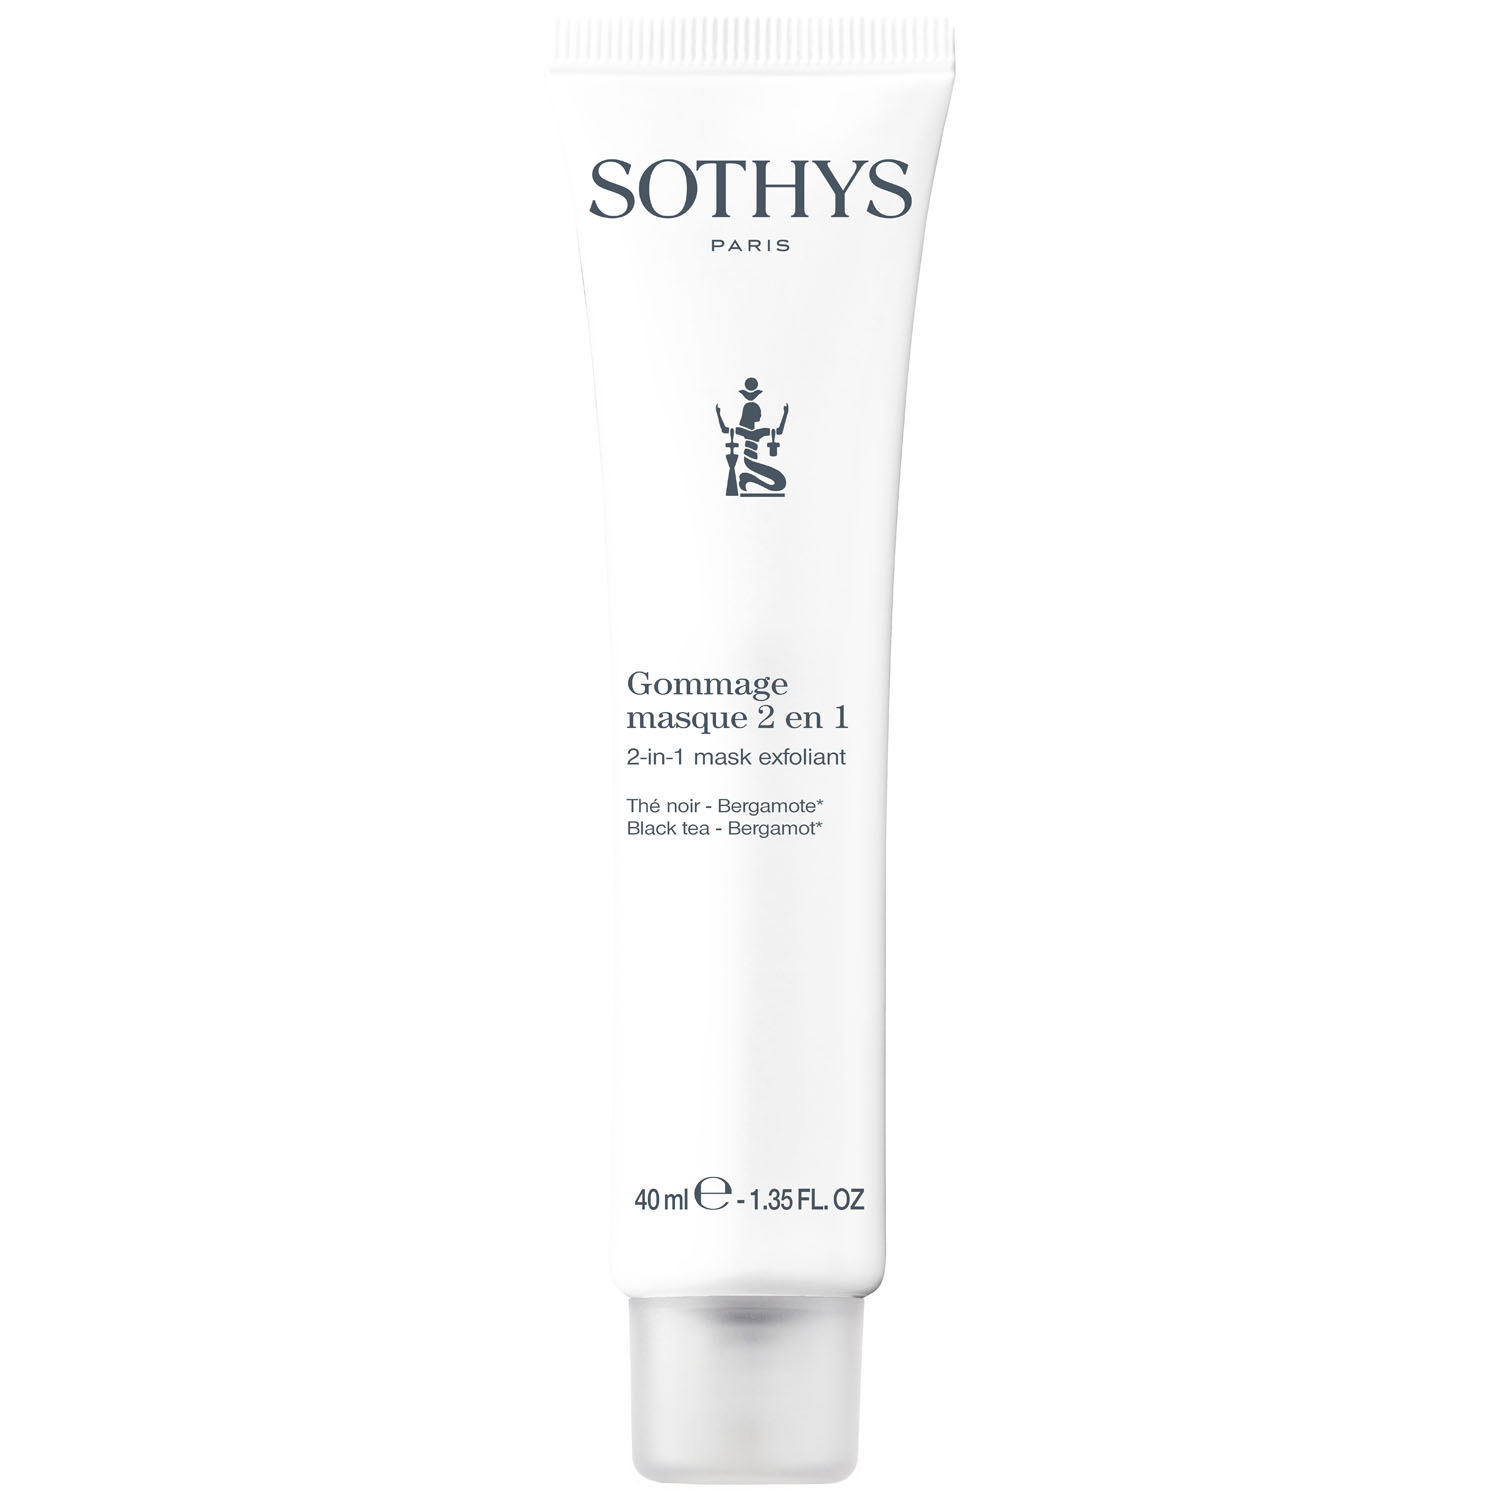 Sothys Маска-эксфолиант 2-в-1, 40 мл (Sothys, Seasonal Treatment) srisri tattva маска для лица с нимом очищает улучшает цвет лица 100мл индия